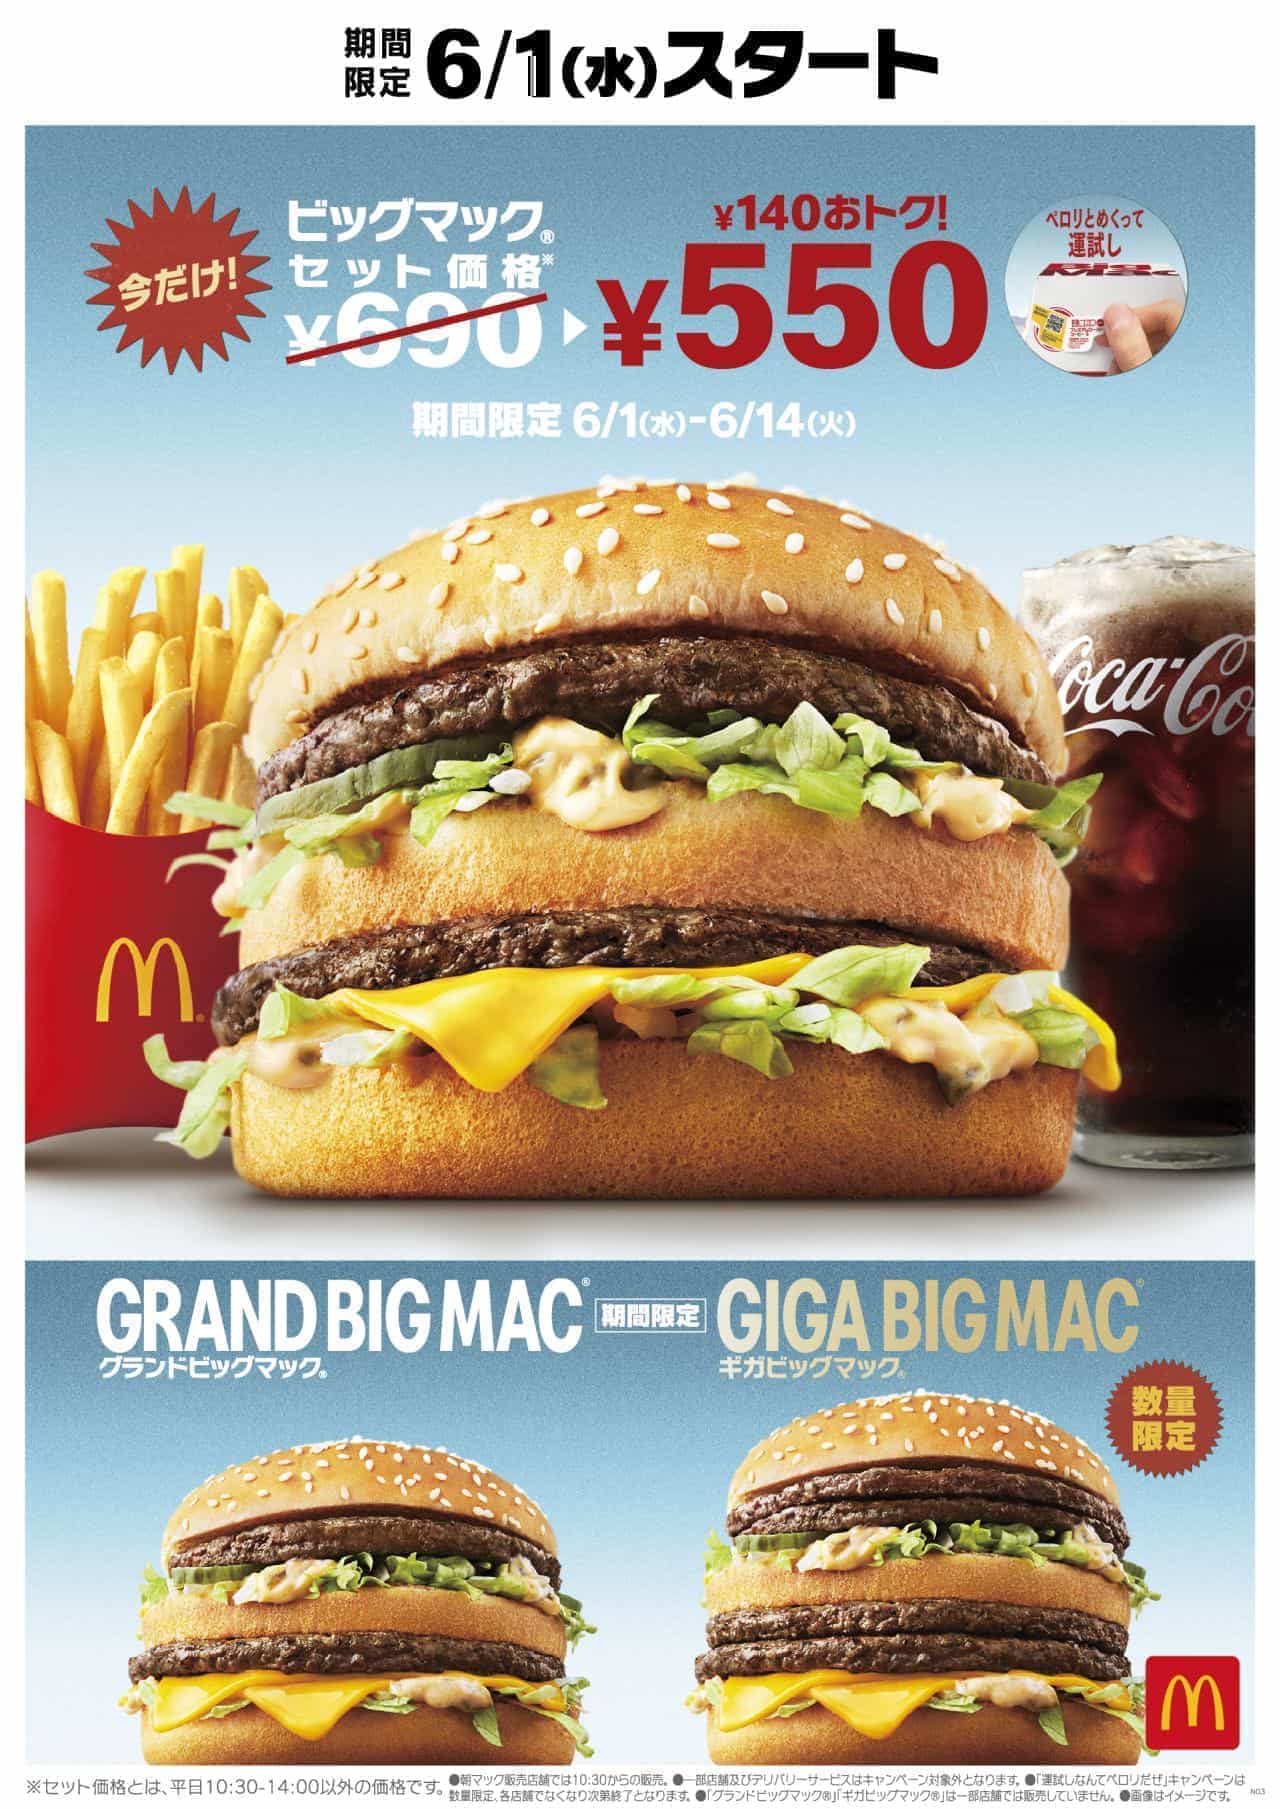 McDonald's "A Big Mac is just a piece of cake." Campaign